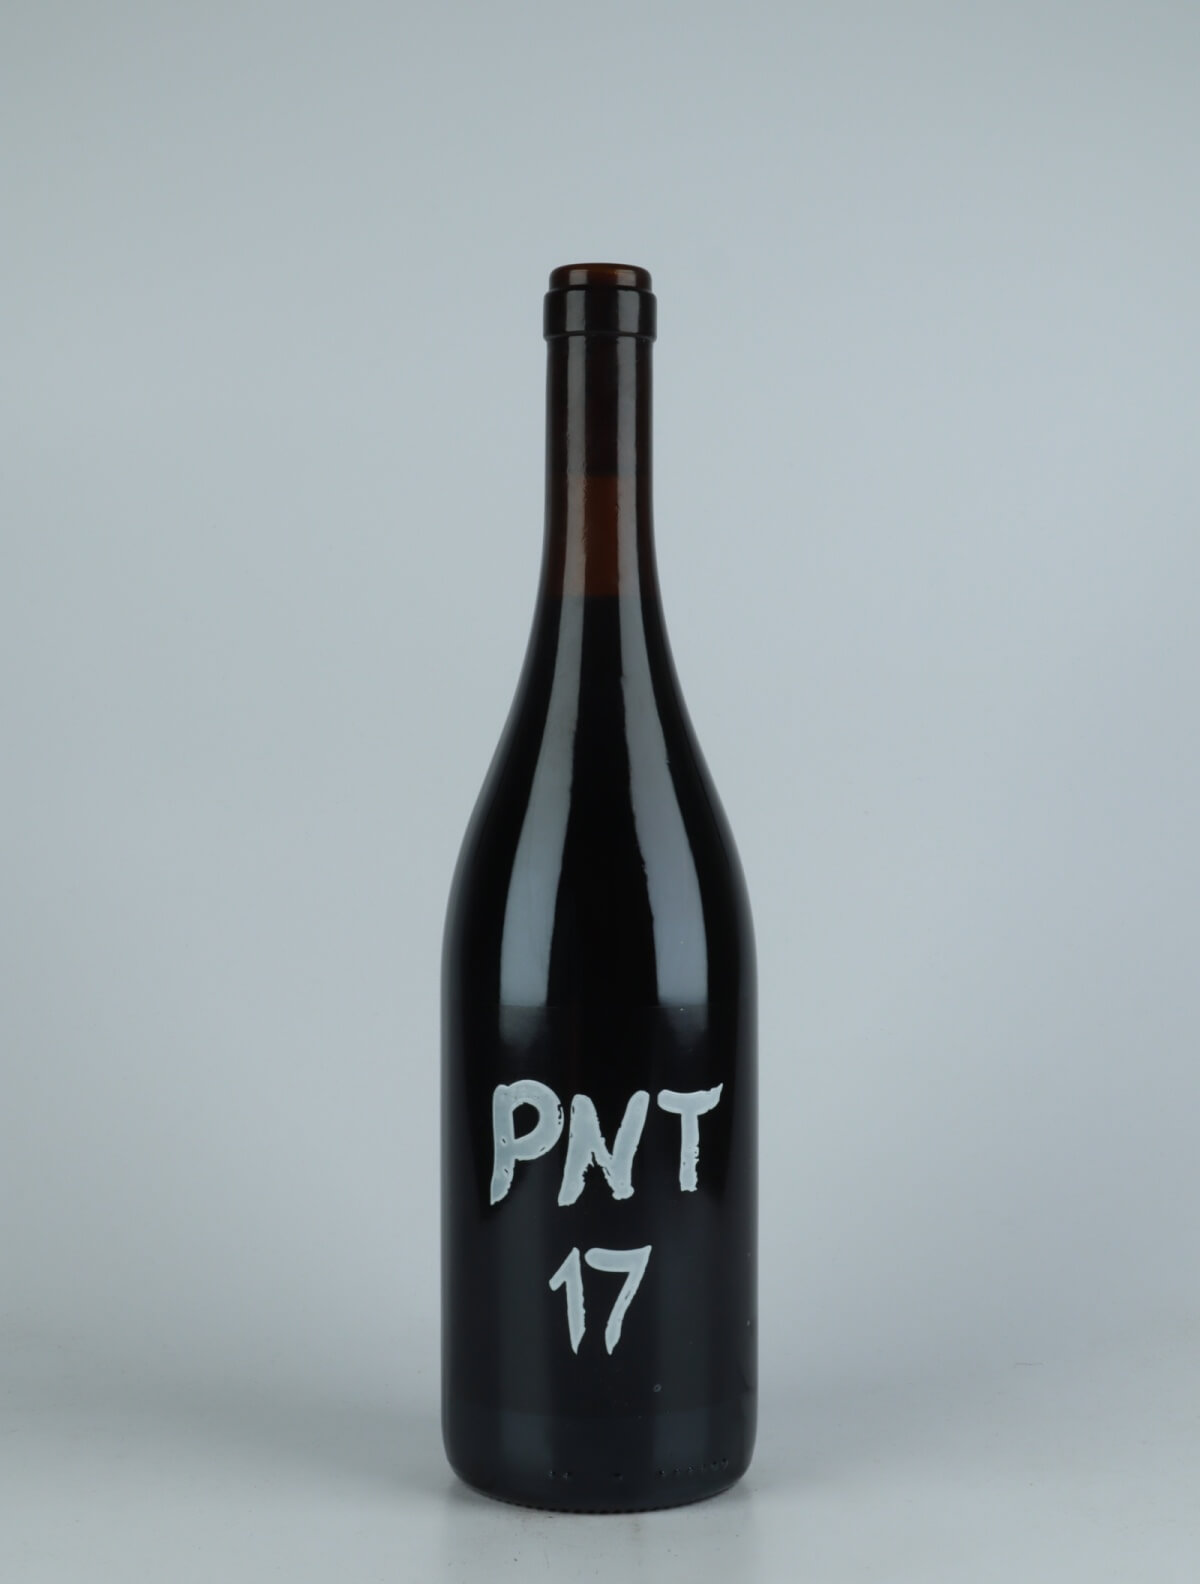 En flaske 2017 PNT Rødvin fra Le Coste, Lazio i Italien